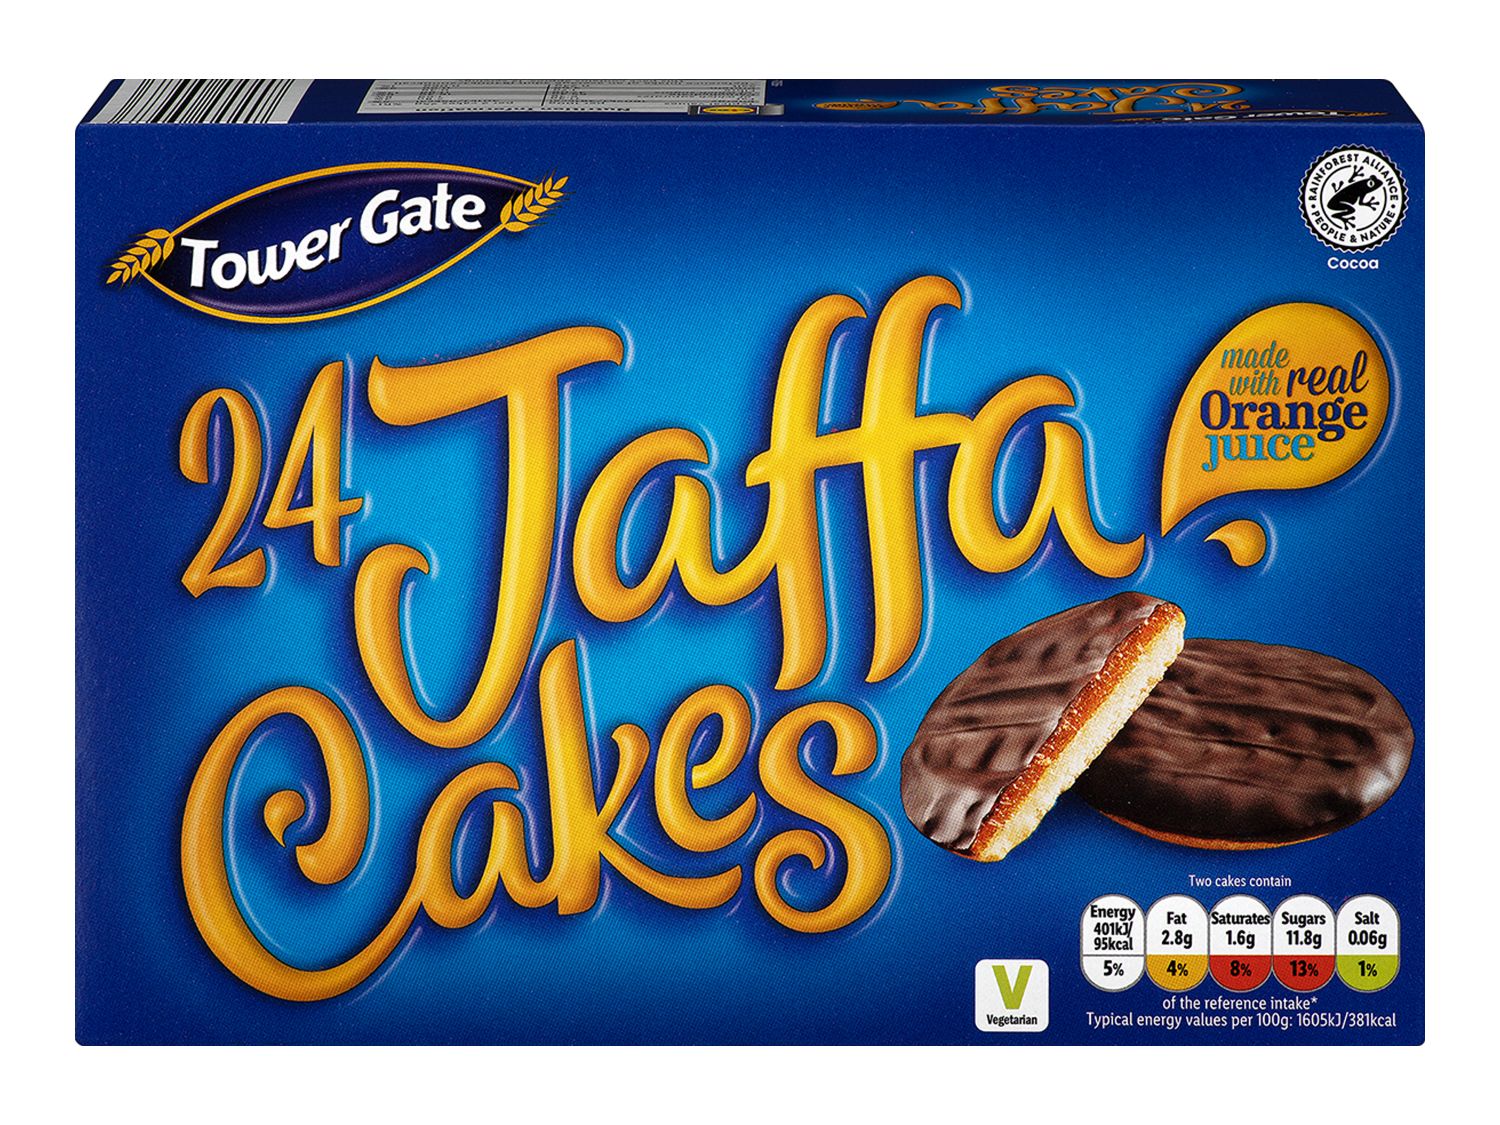 Tower Gate Orange Jaffa Cakes Lidl Uk 9660